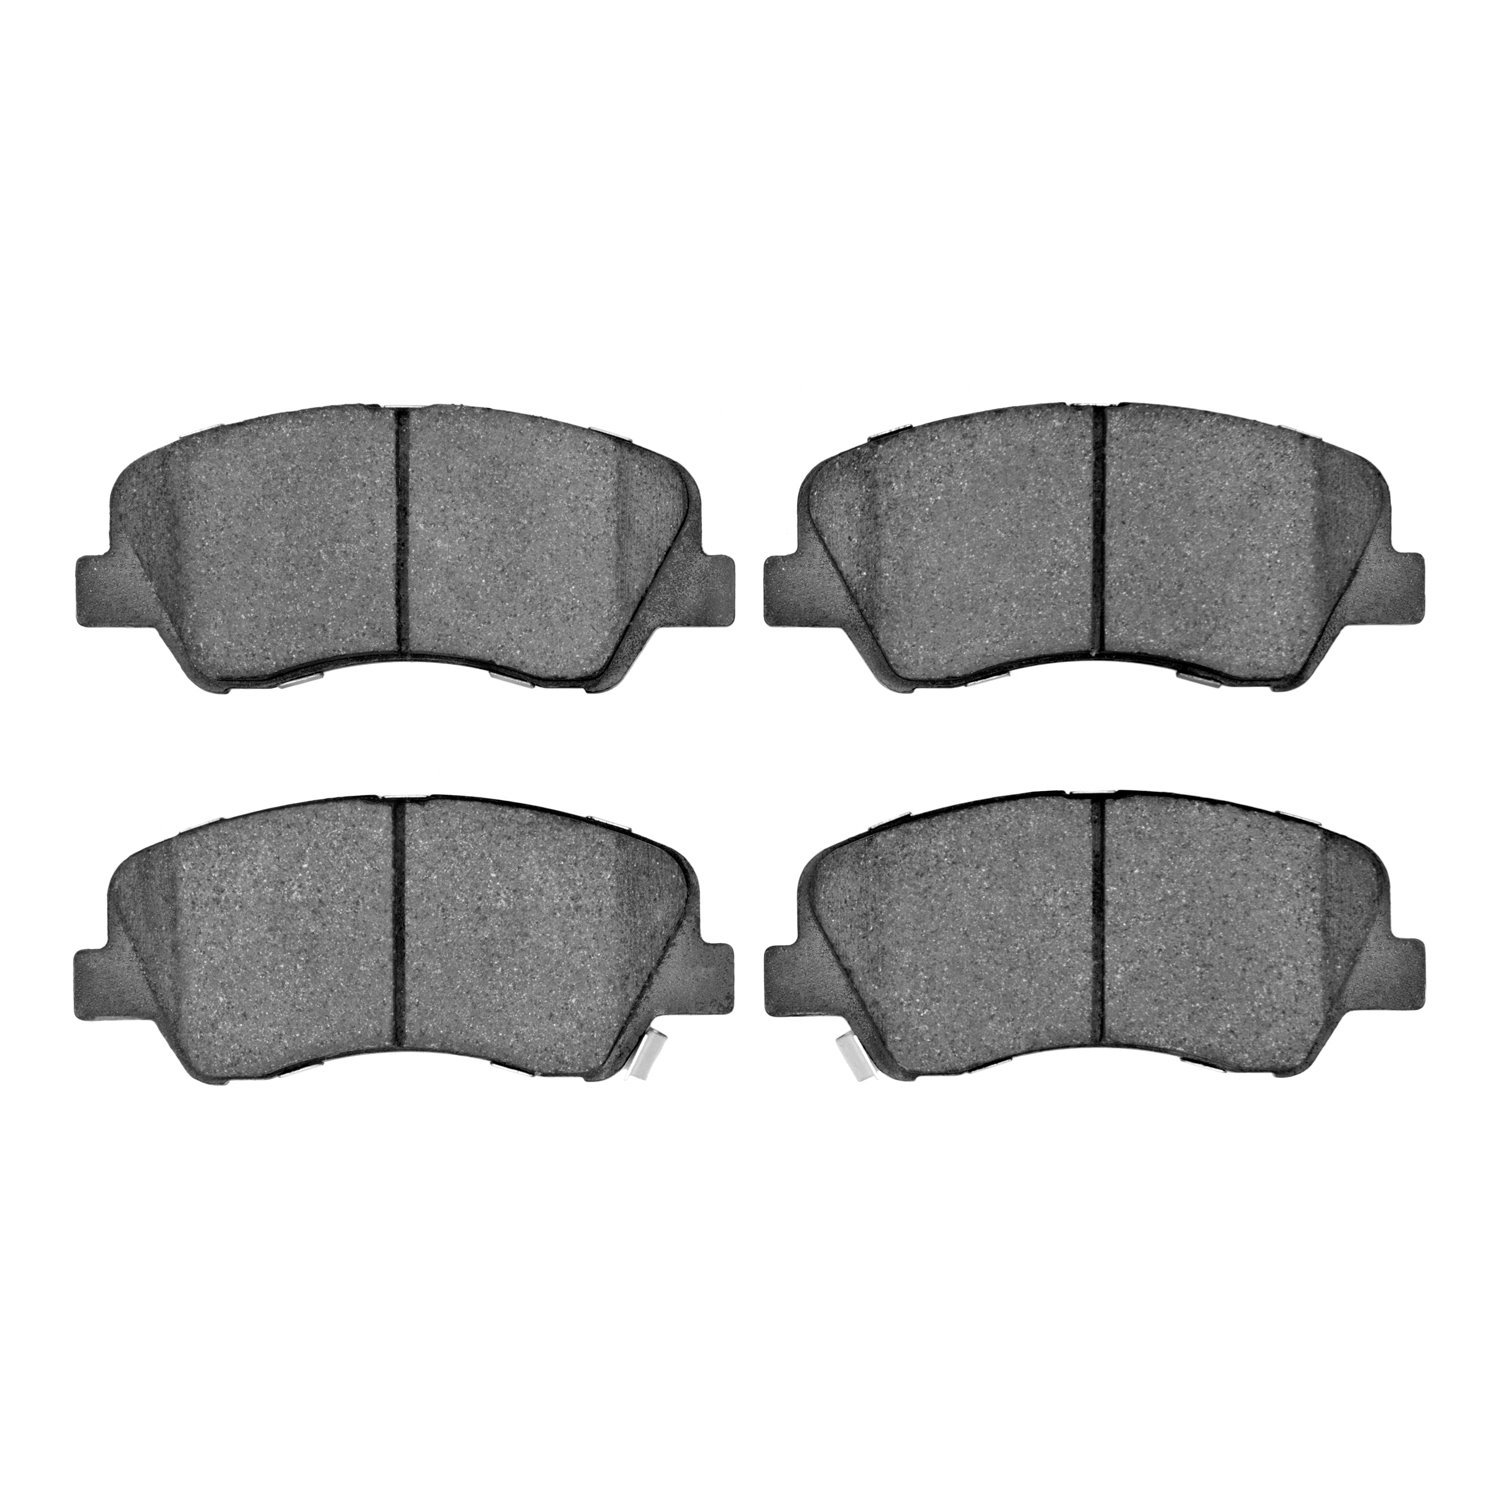 1310-1593-00 3000-Series Ceramic Brake Pads, 2012-2017 Multiple Makes/Models, Position: Front